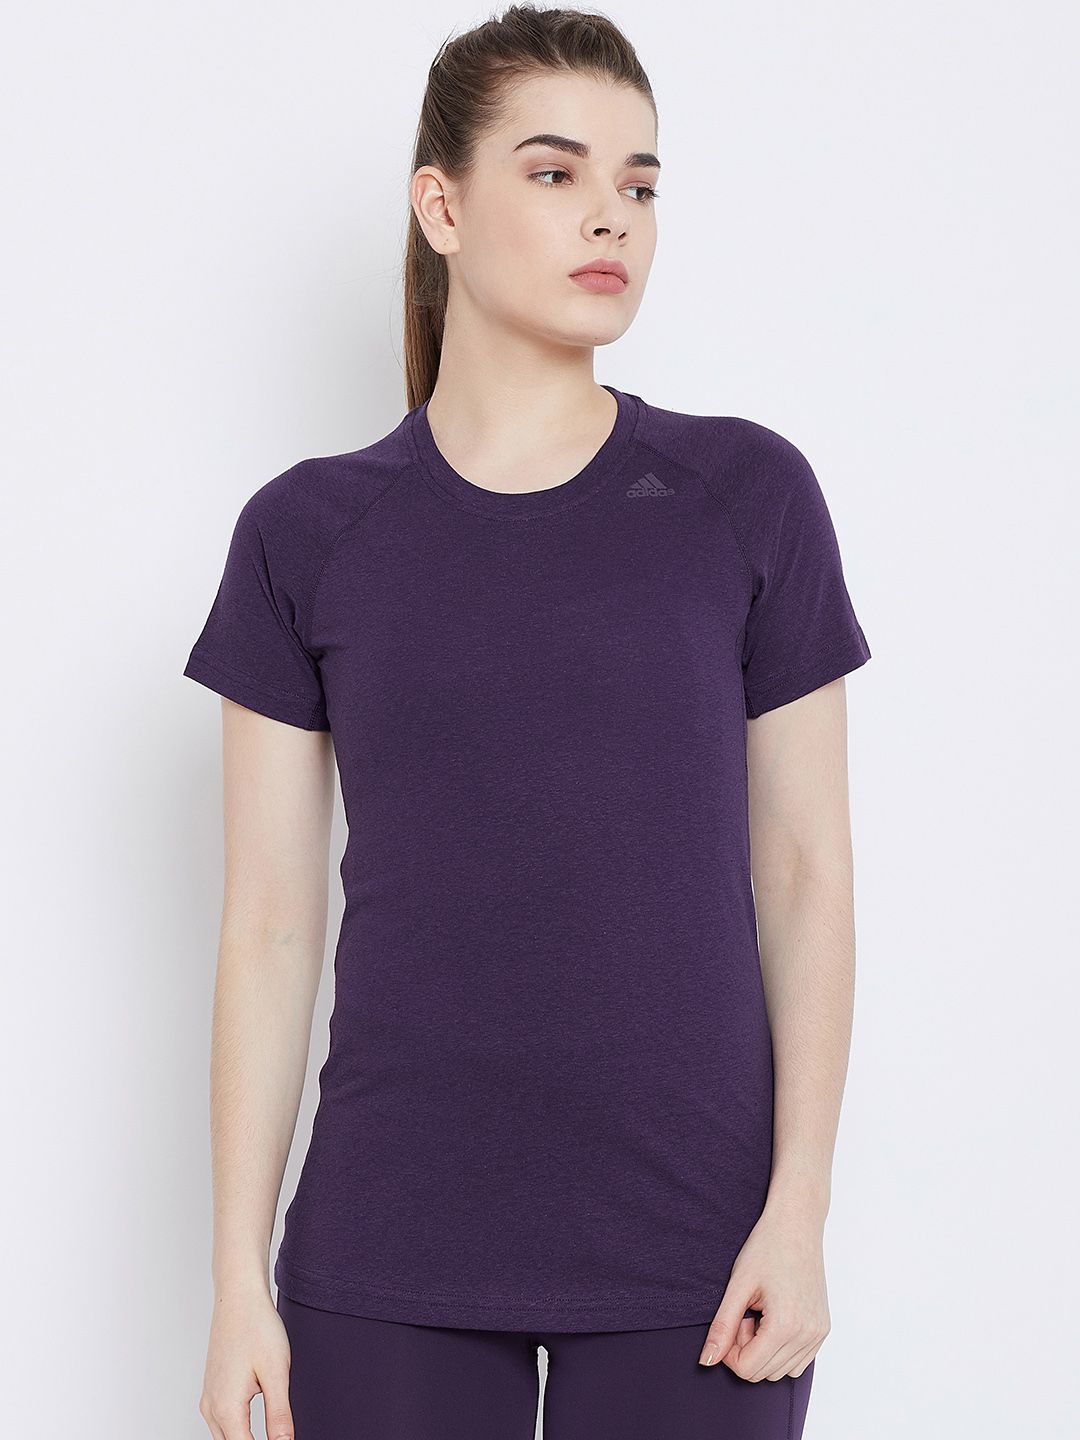 ADIDAS Women Purple Round Neck Freelift T-Shirt Price in India